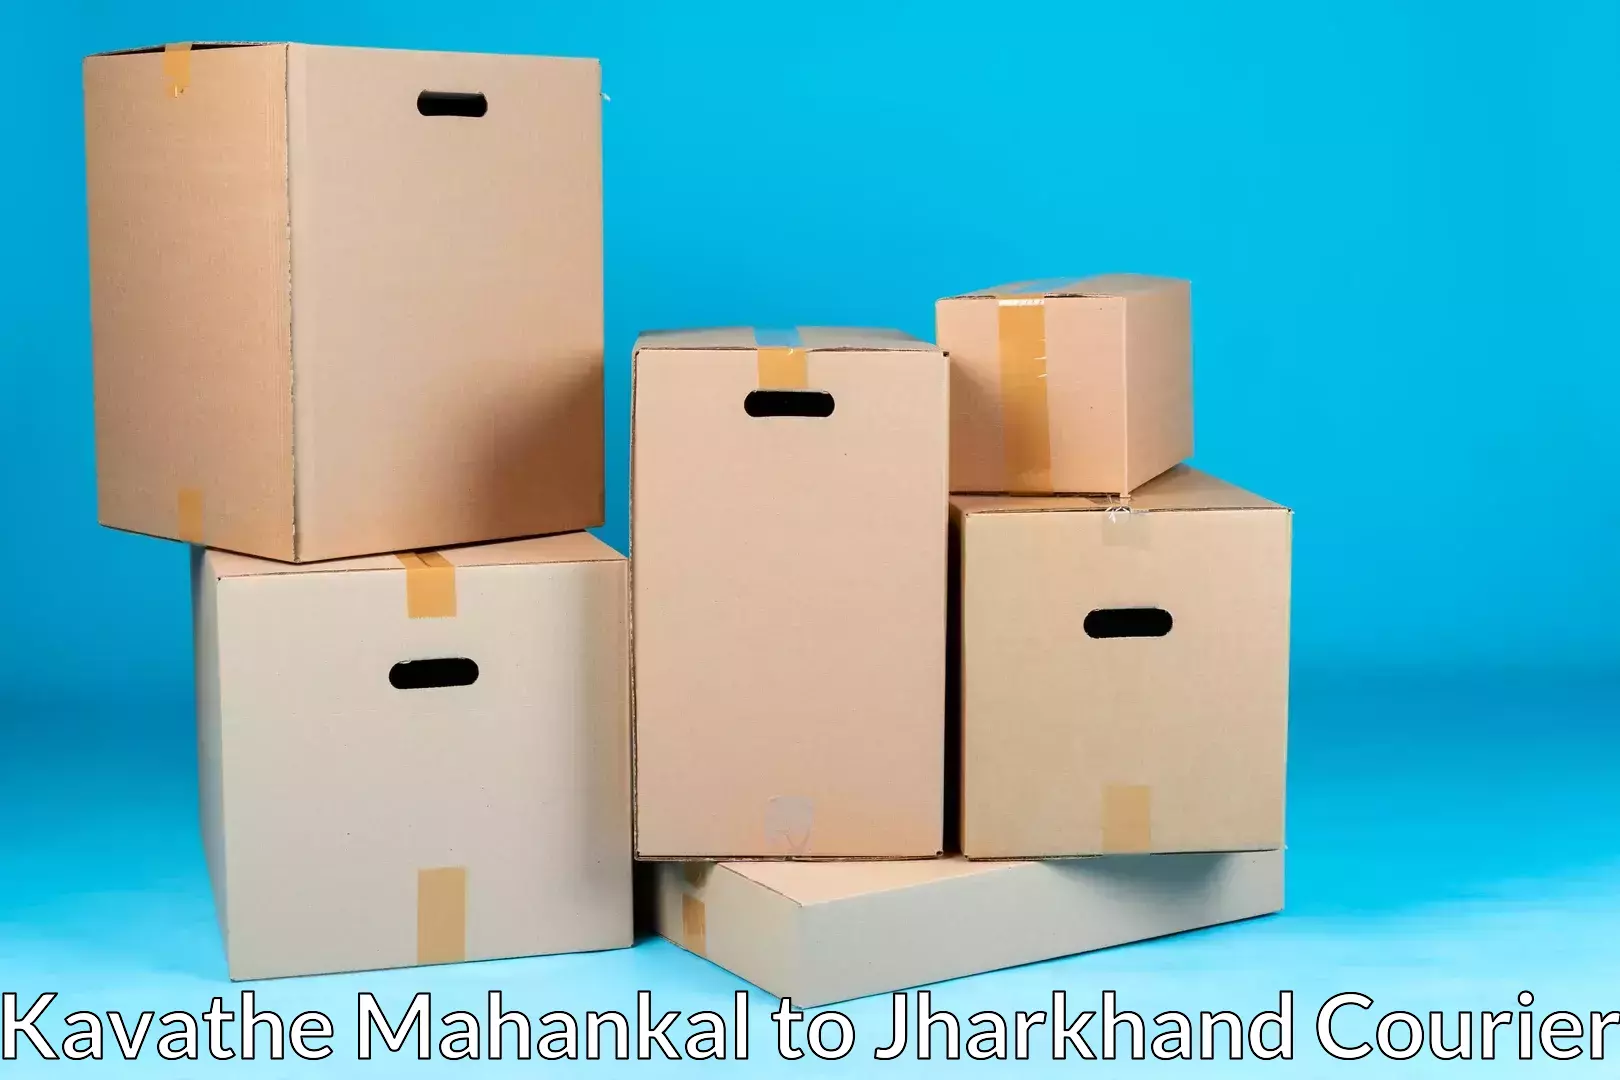 Home goods moving company Kavathe Mahankal to Bokaro